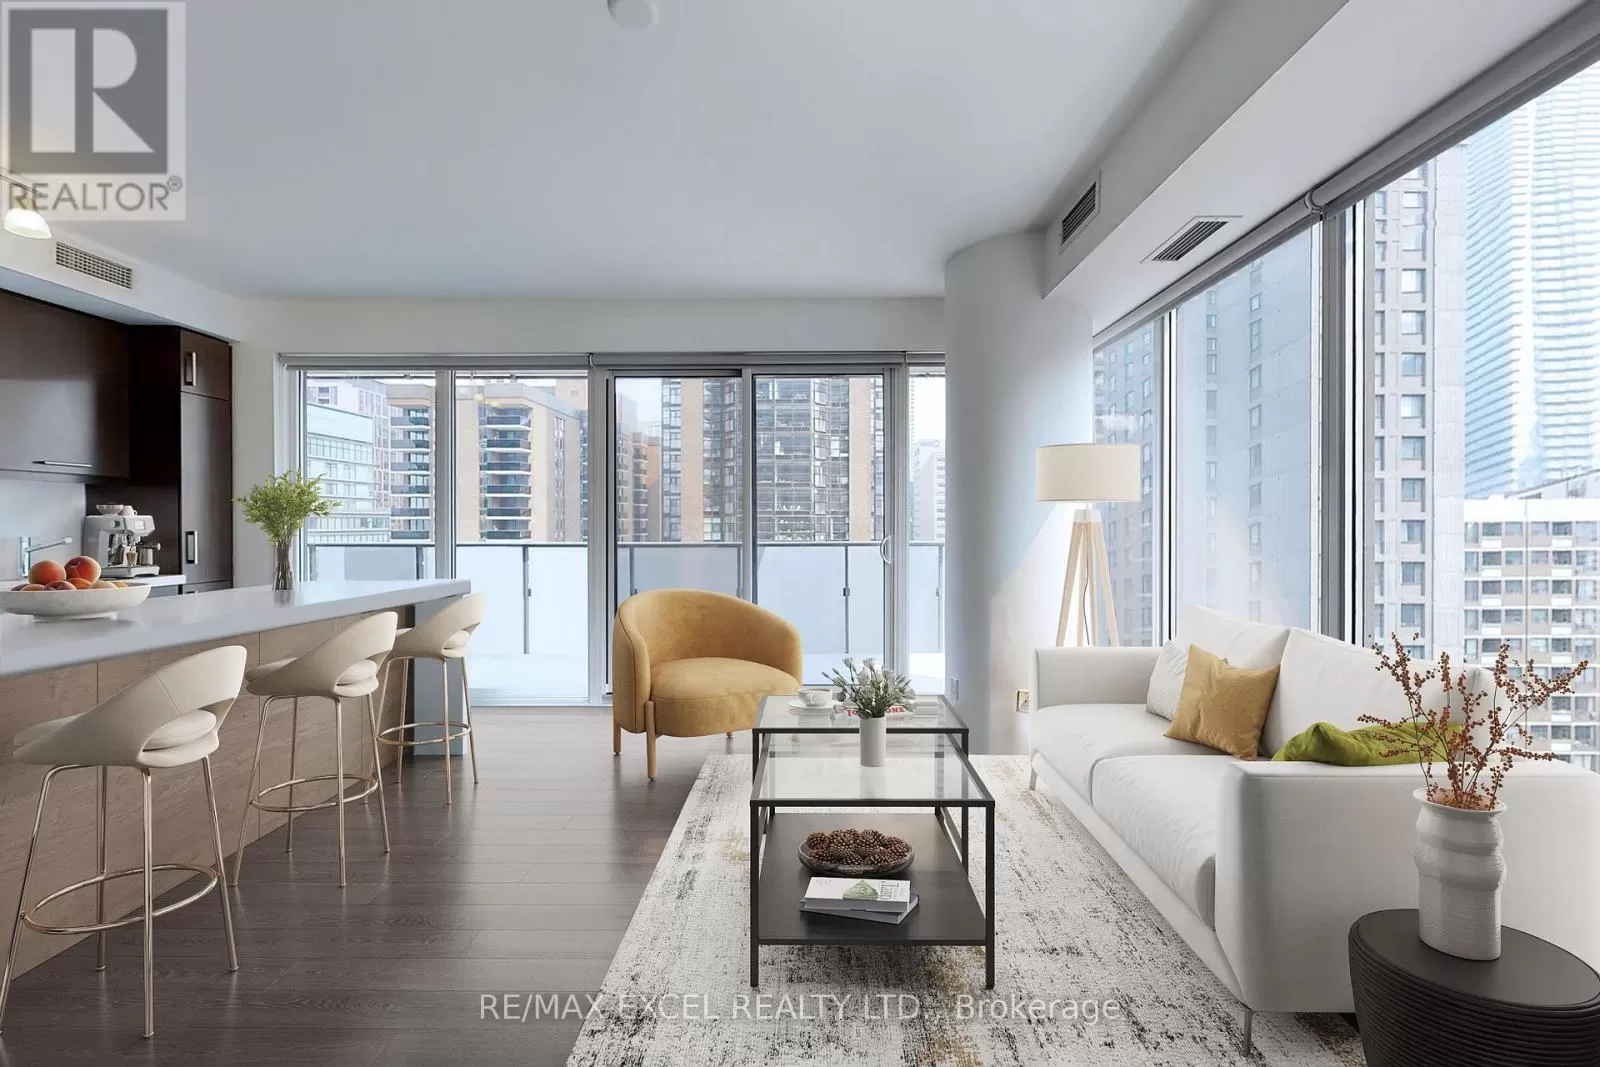 Apartment for rent: 1410 - 1080 Bay Street, Toronto, Ontario M5S 0A6